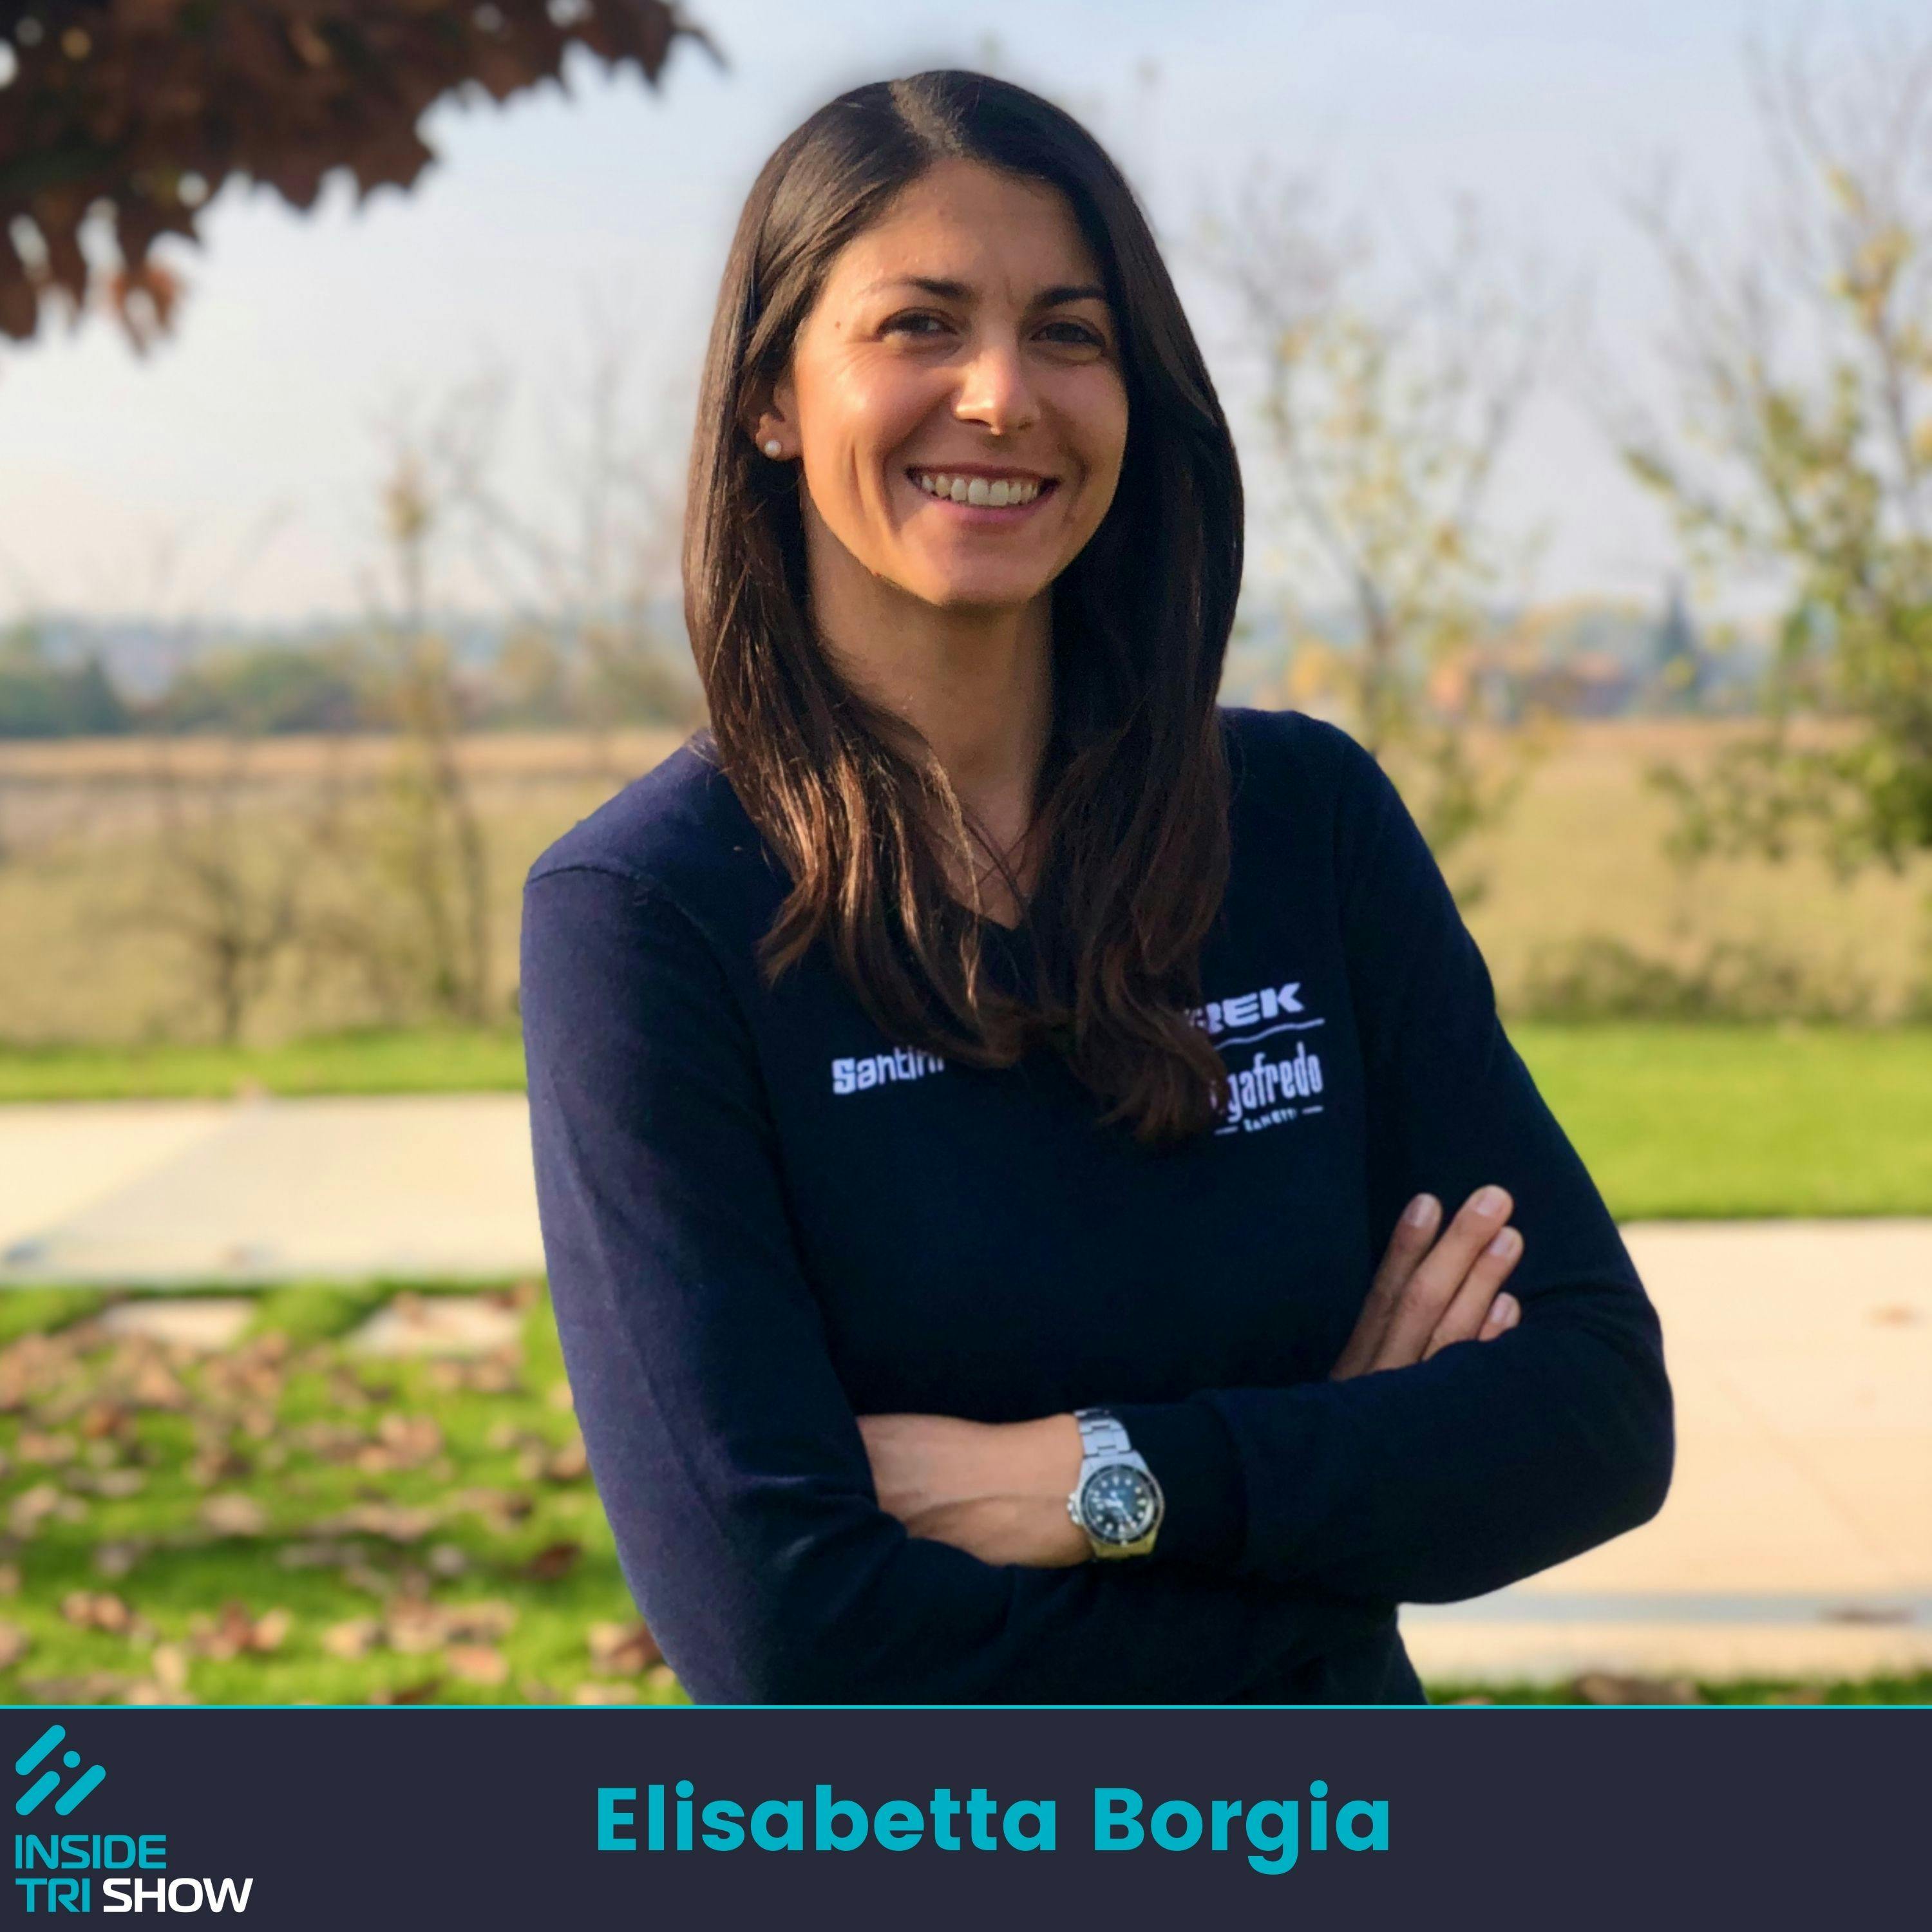 Elisabetta Borgia: Trek Segafredo's Sports Psychologist